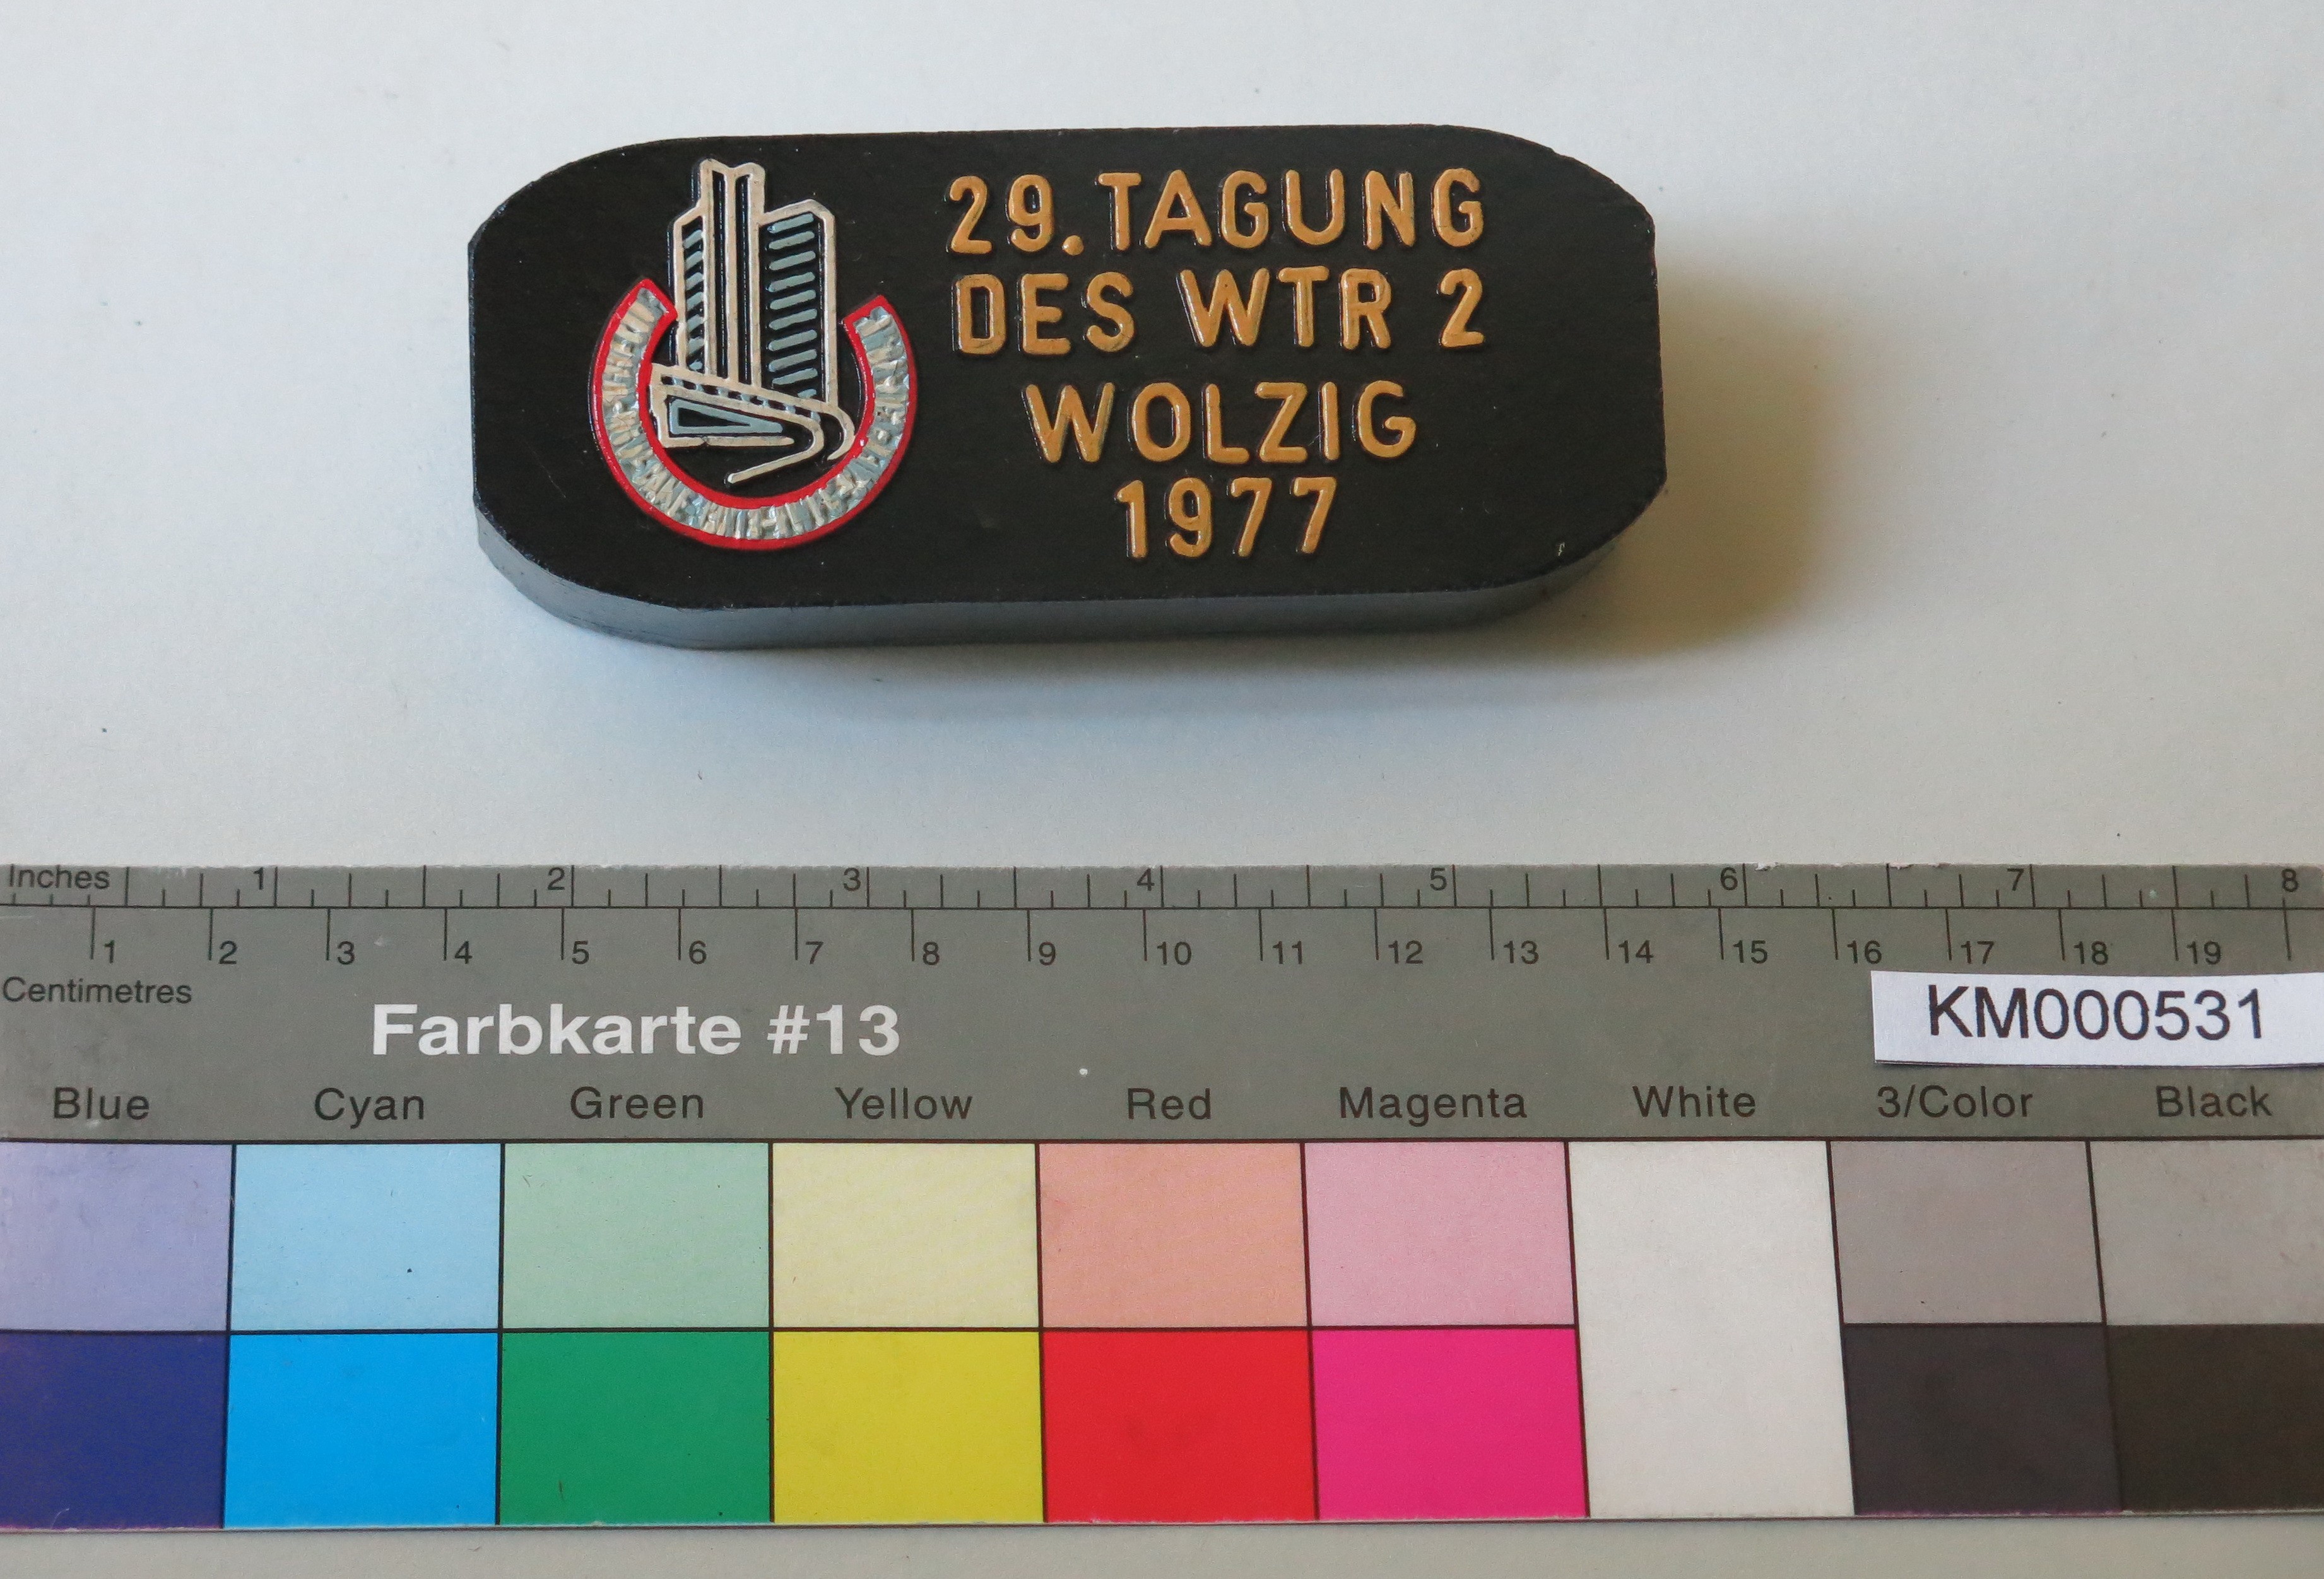 Zierbrikett "29. TAGUNG DES WTR 2 WOLZIG 1977" (Energiefabrik Knappenrode CC BY-SA)